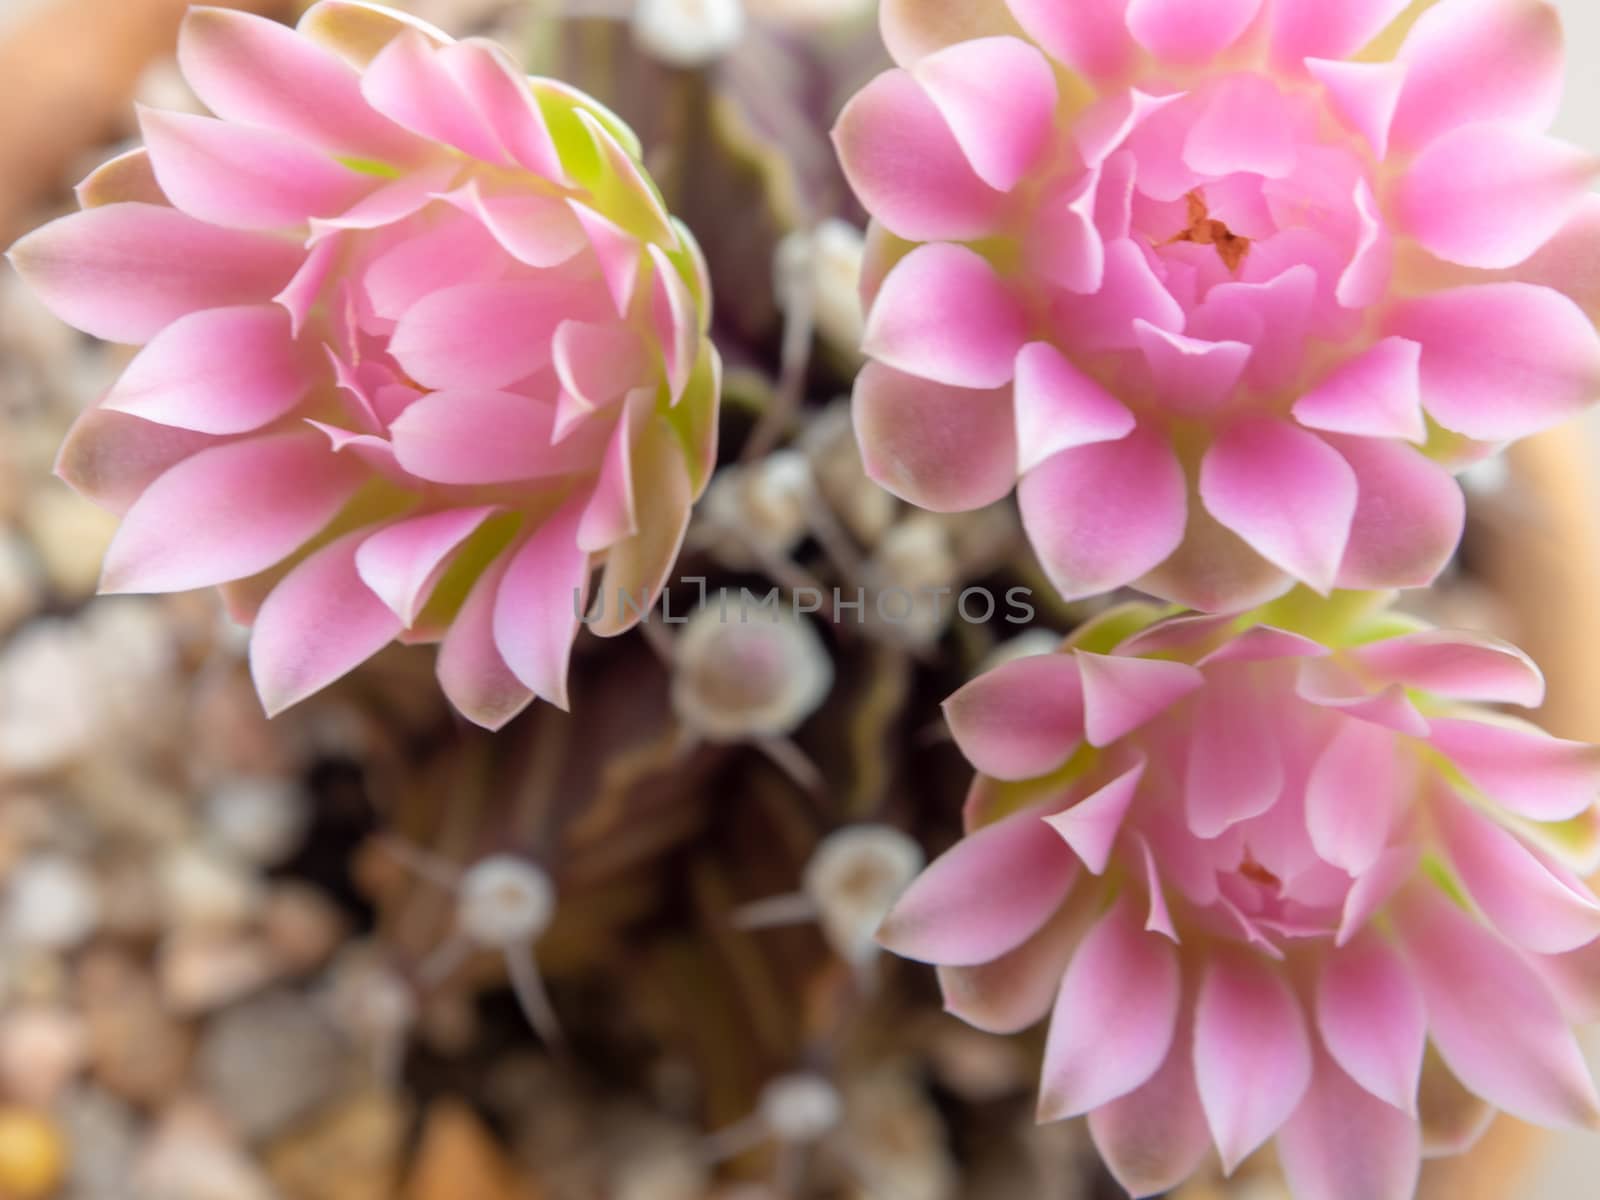 Group of Gymnocalycium Cactus flower,close-up Pink delicate peta by Satakorn